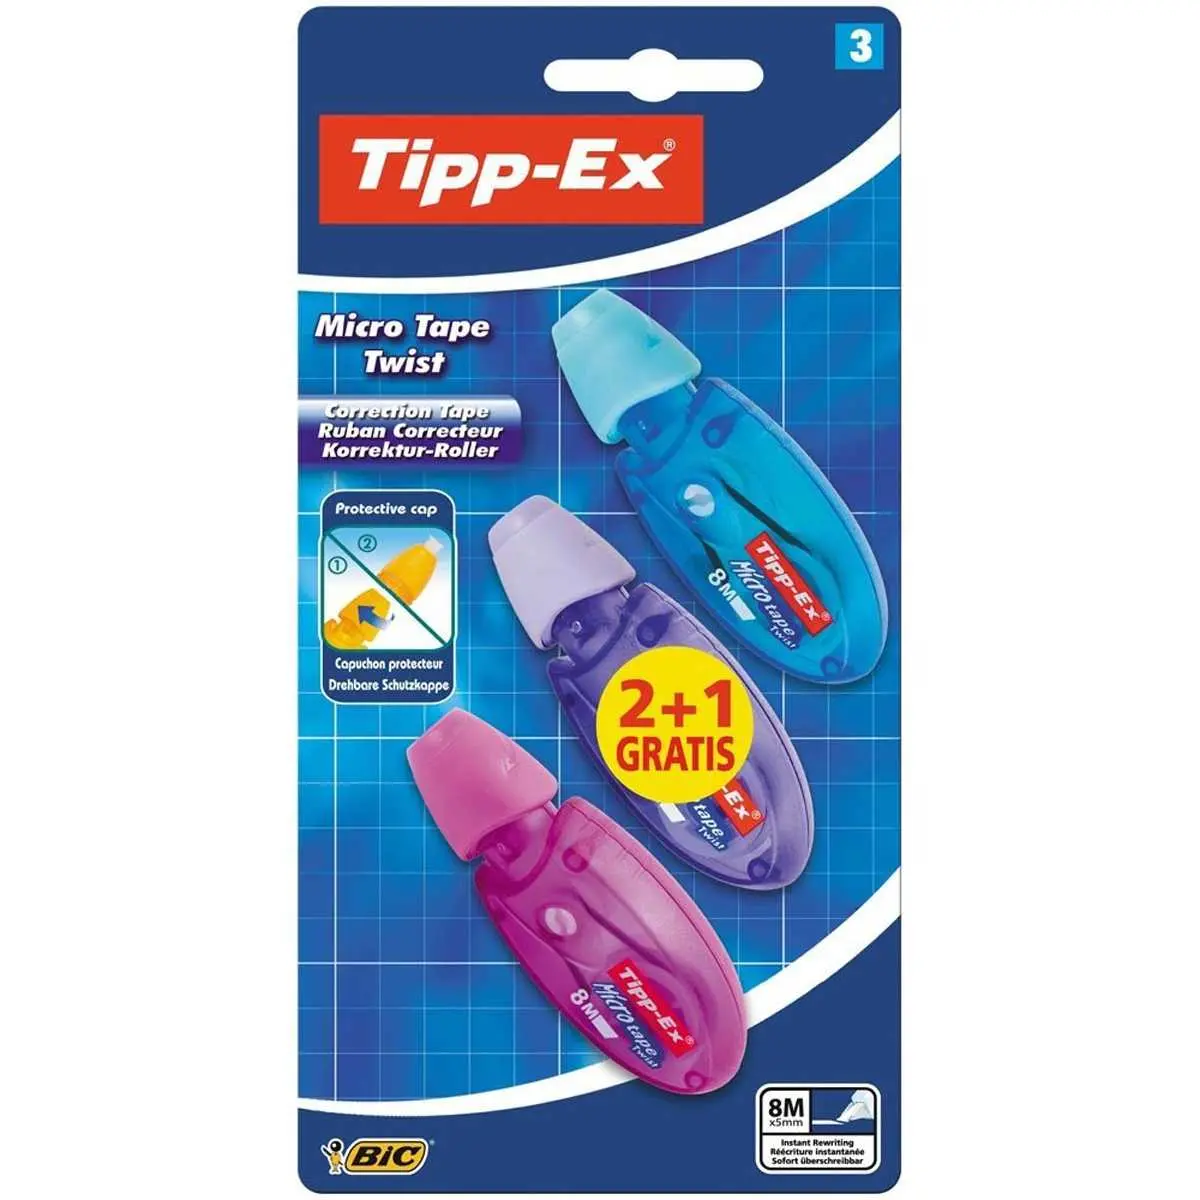 Tipp-Ex Micro Tape Twist 2+1 Pack de 3 Cintas Correctoras 5mm x 8m - Cabezal Rotativo - Escritura In